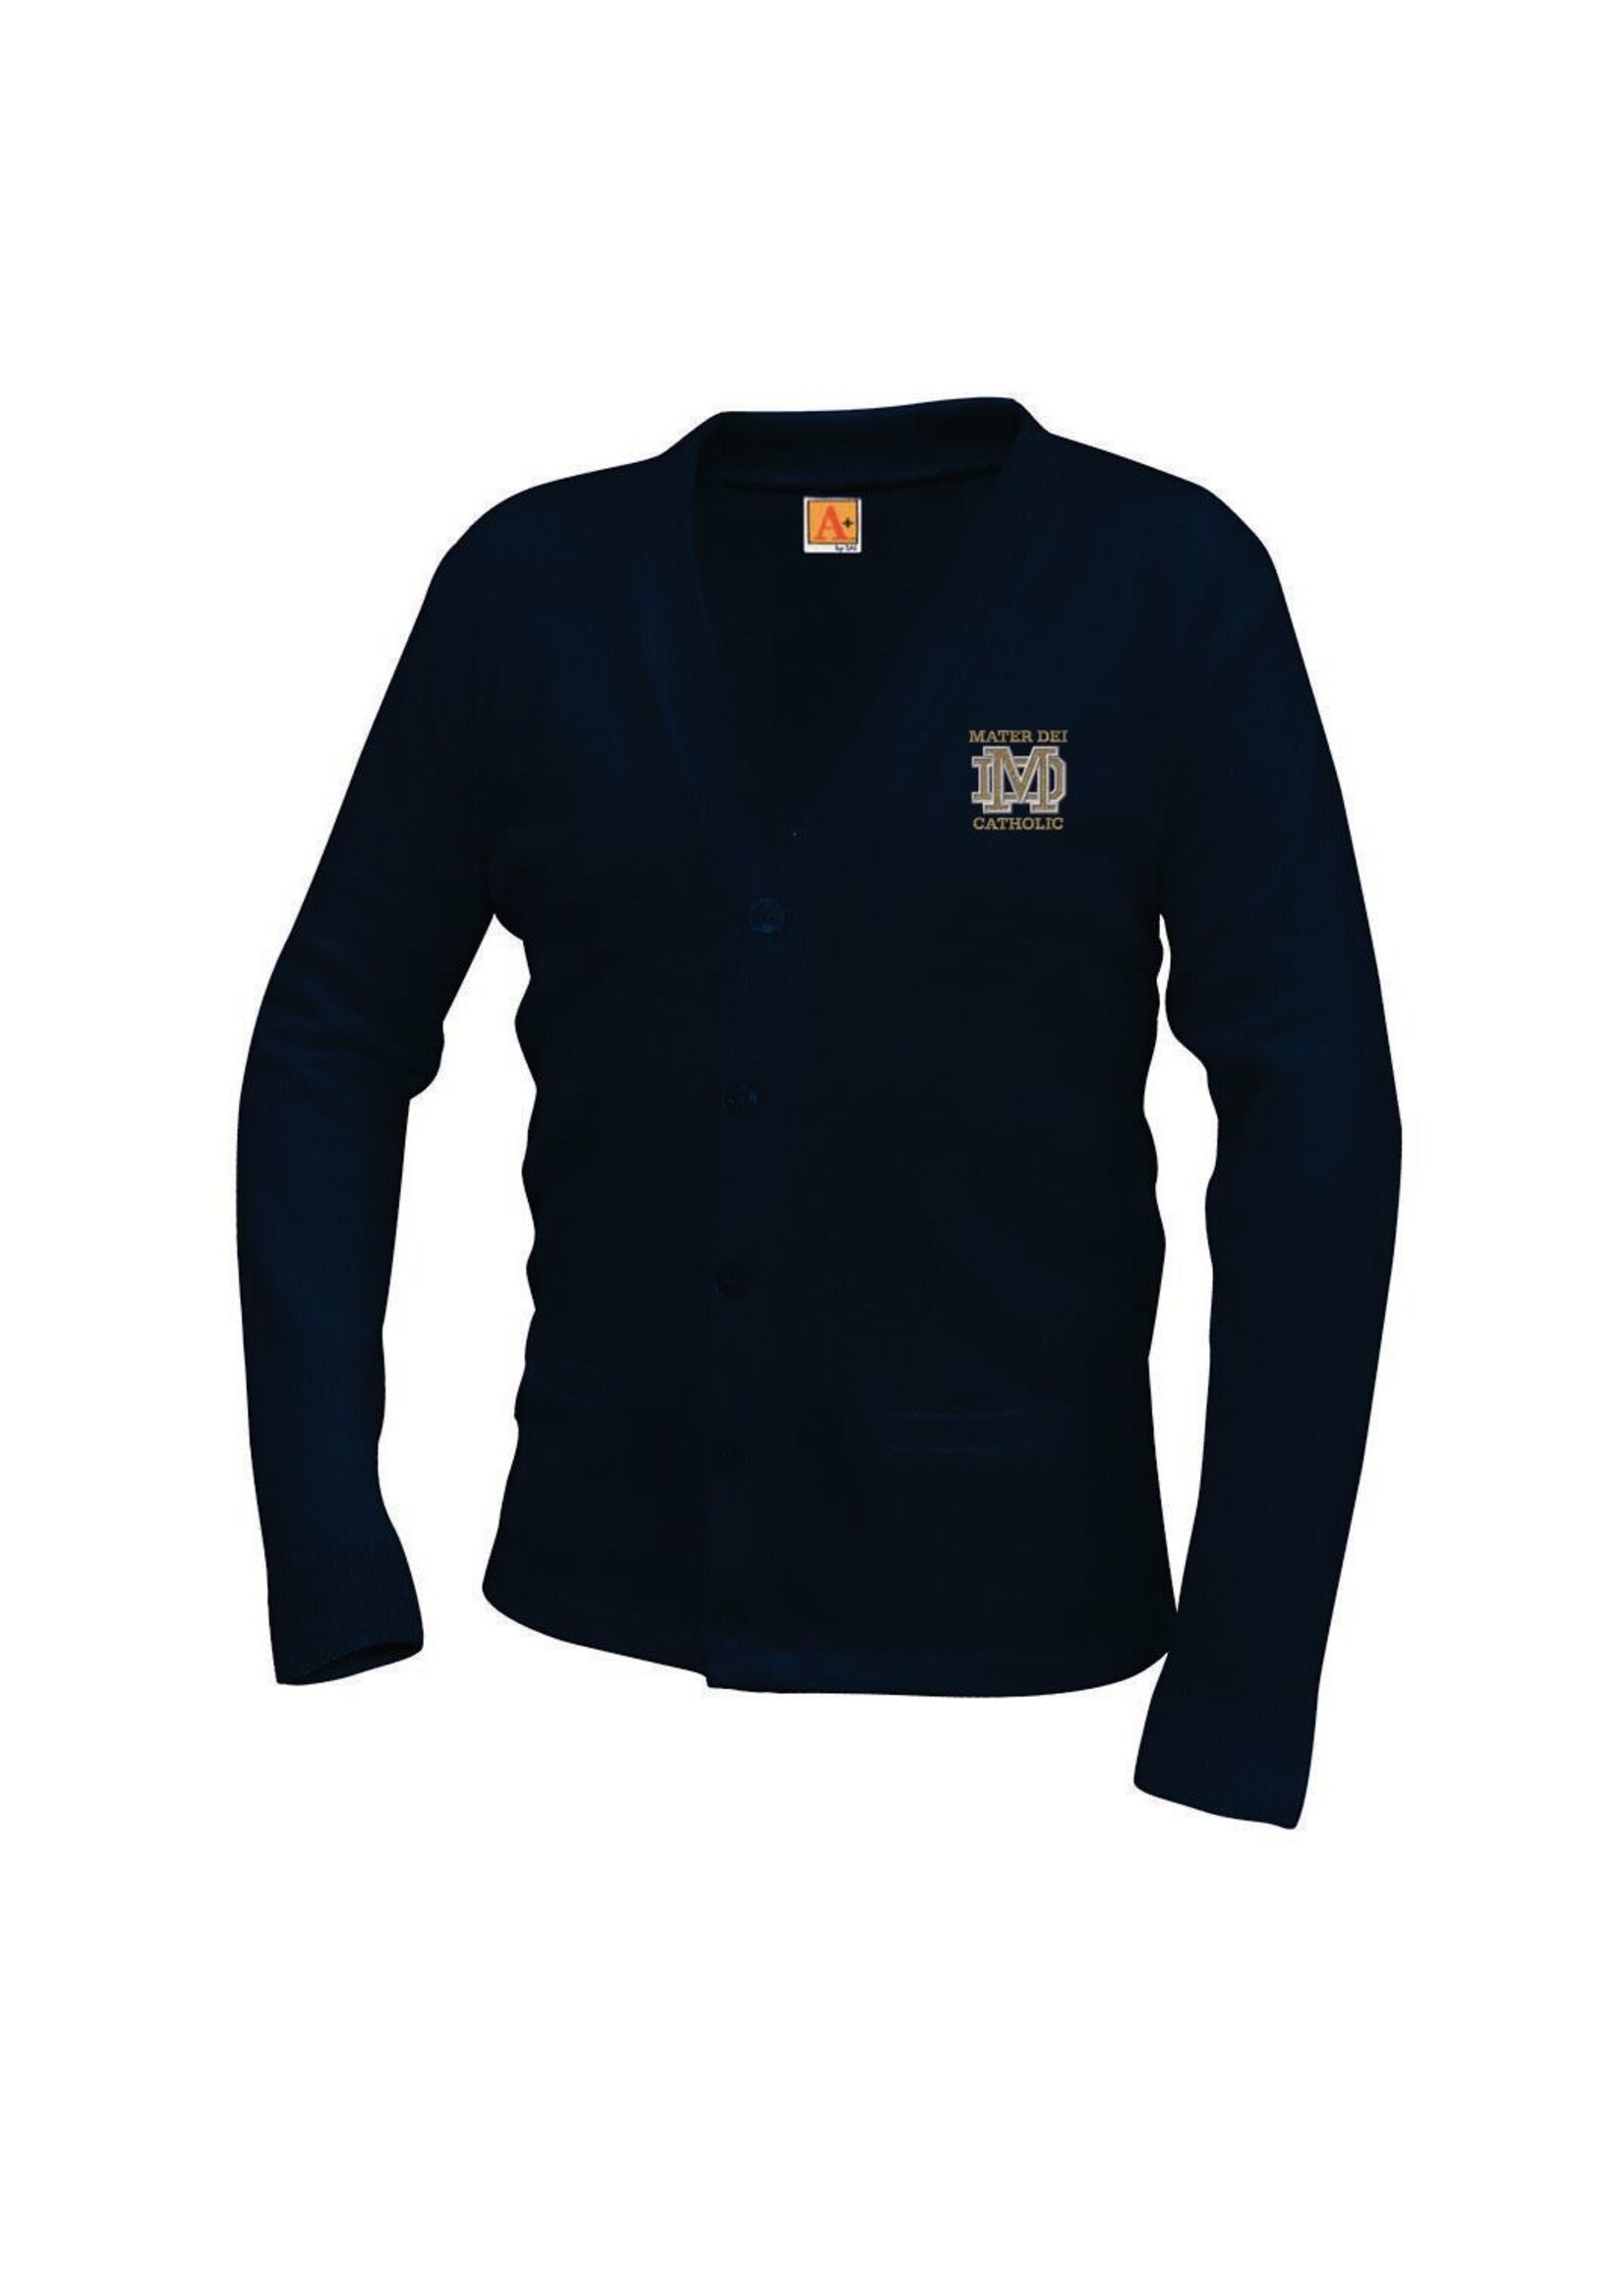 MDC Navy V-neck cardigan sweater with pockets